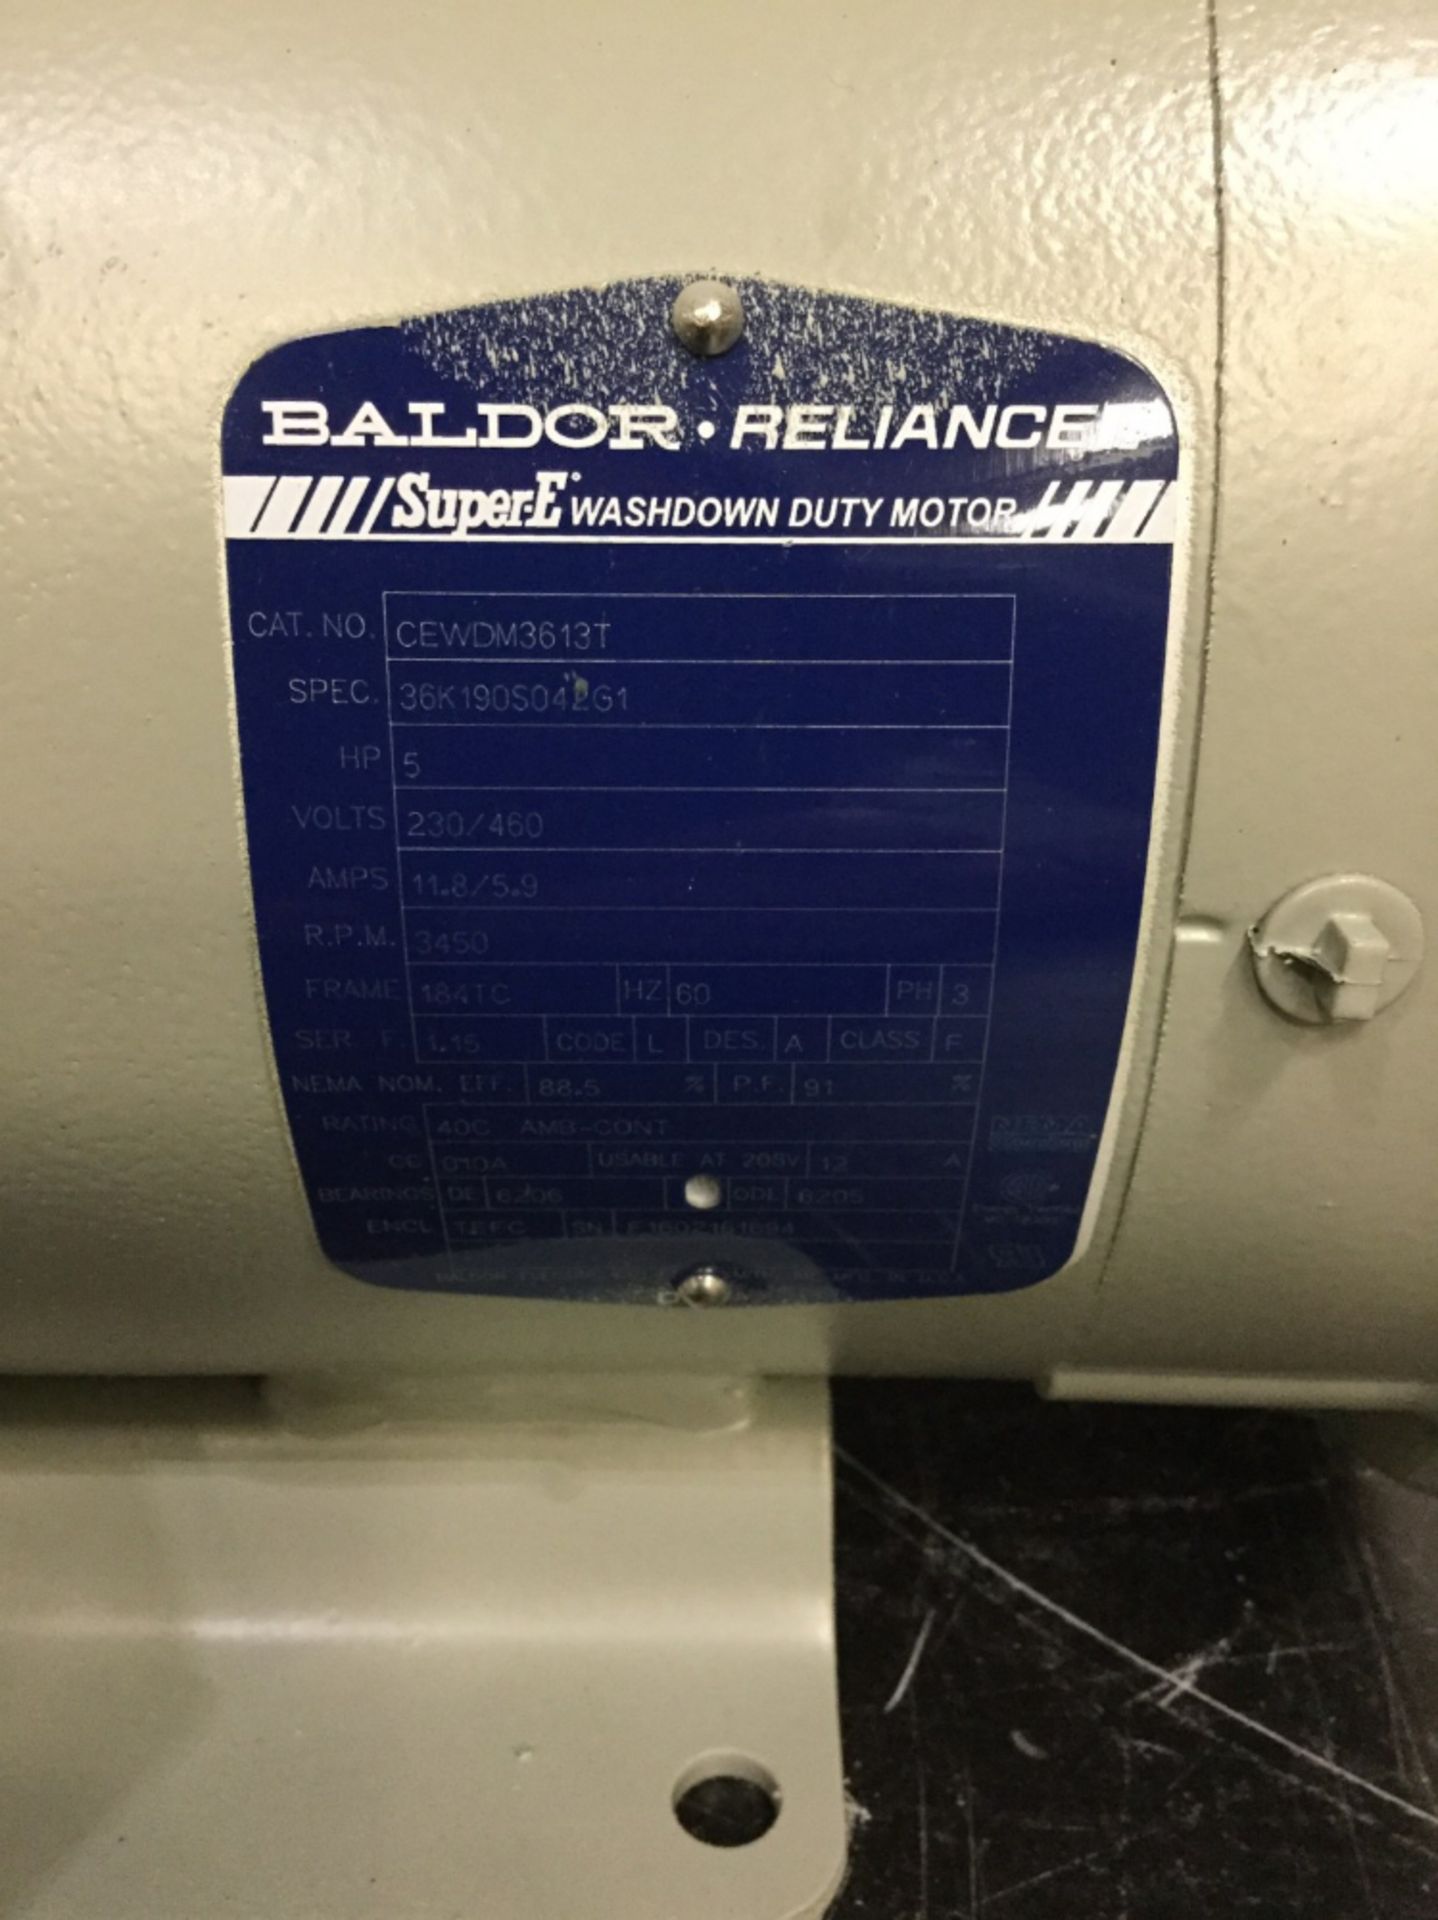 Baldor Reliance Super-E Washdown Duty Motor - Image 2 of 2